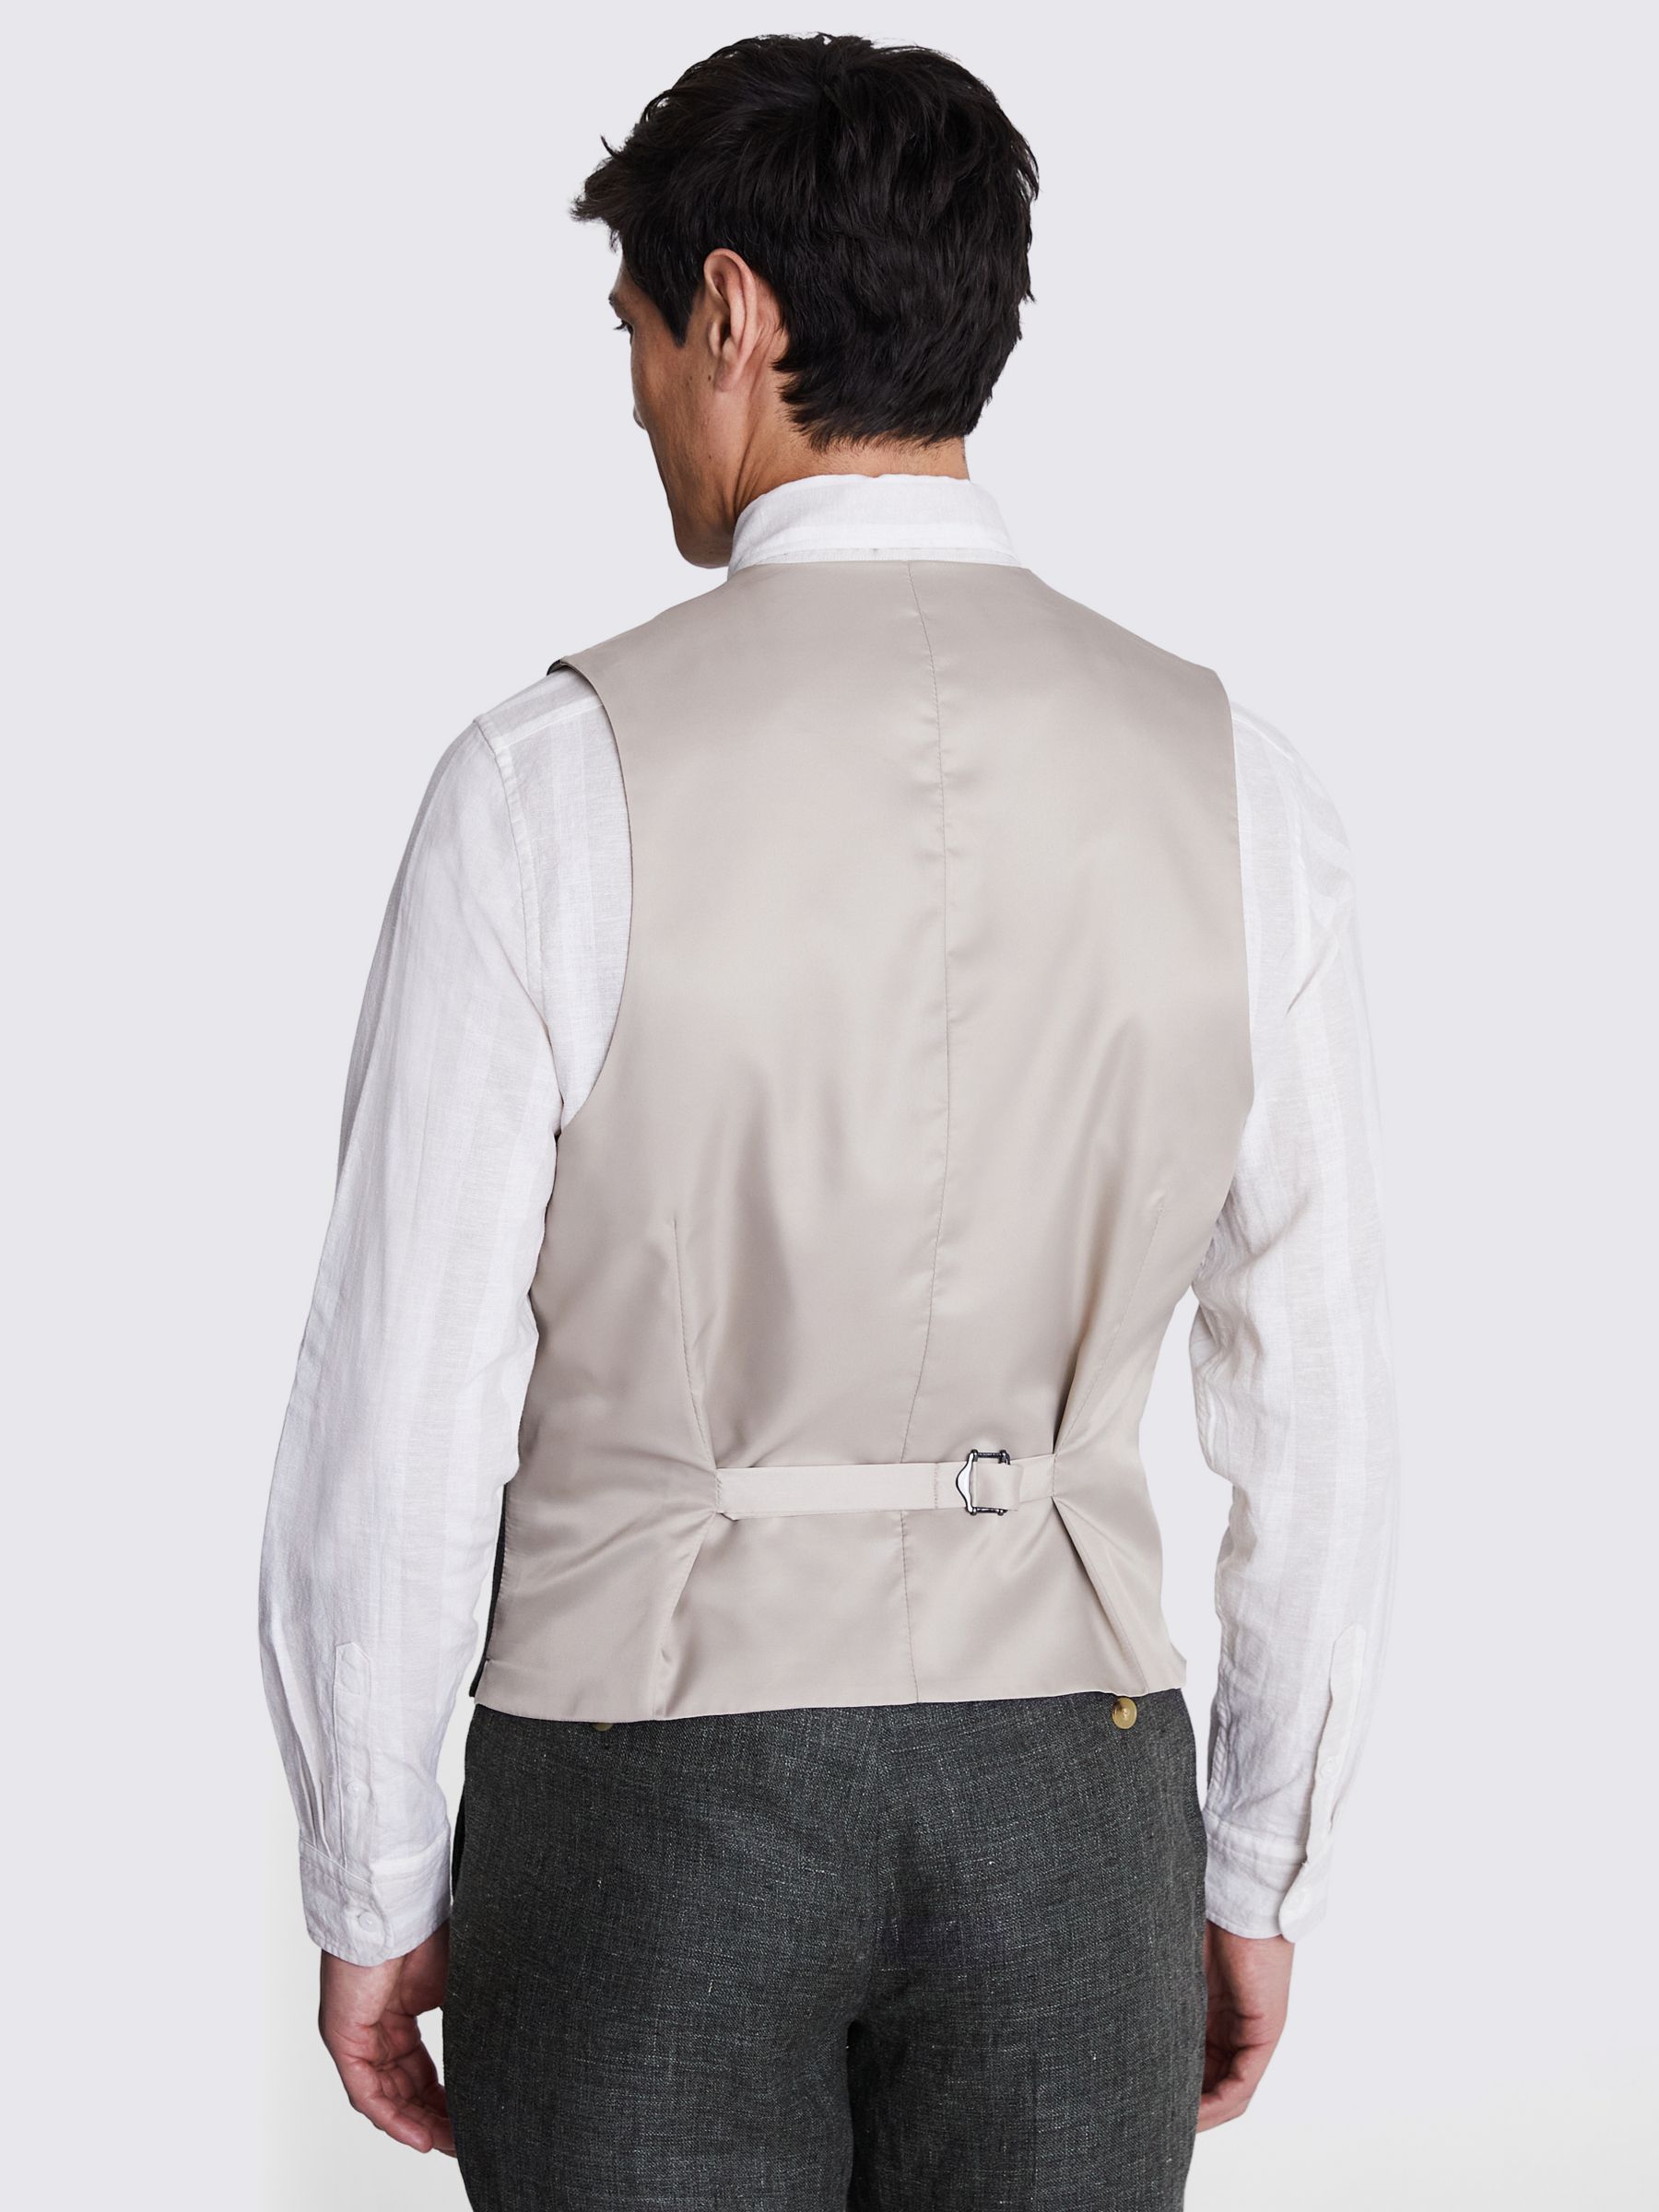 Moss Linen Suit Waistocoat, Khaki, 40R